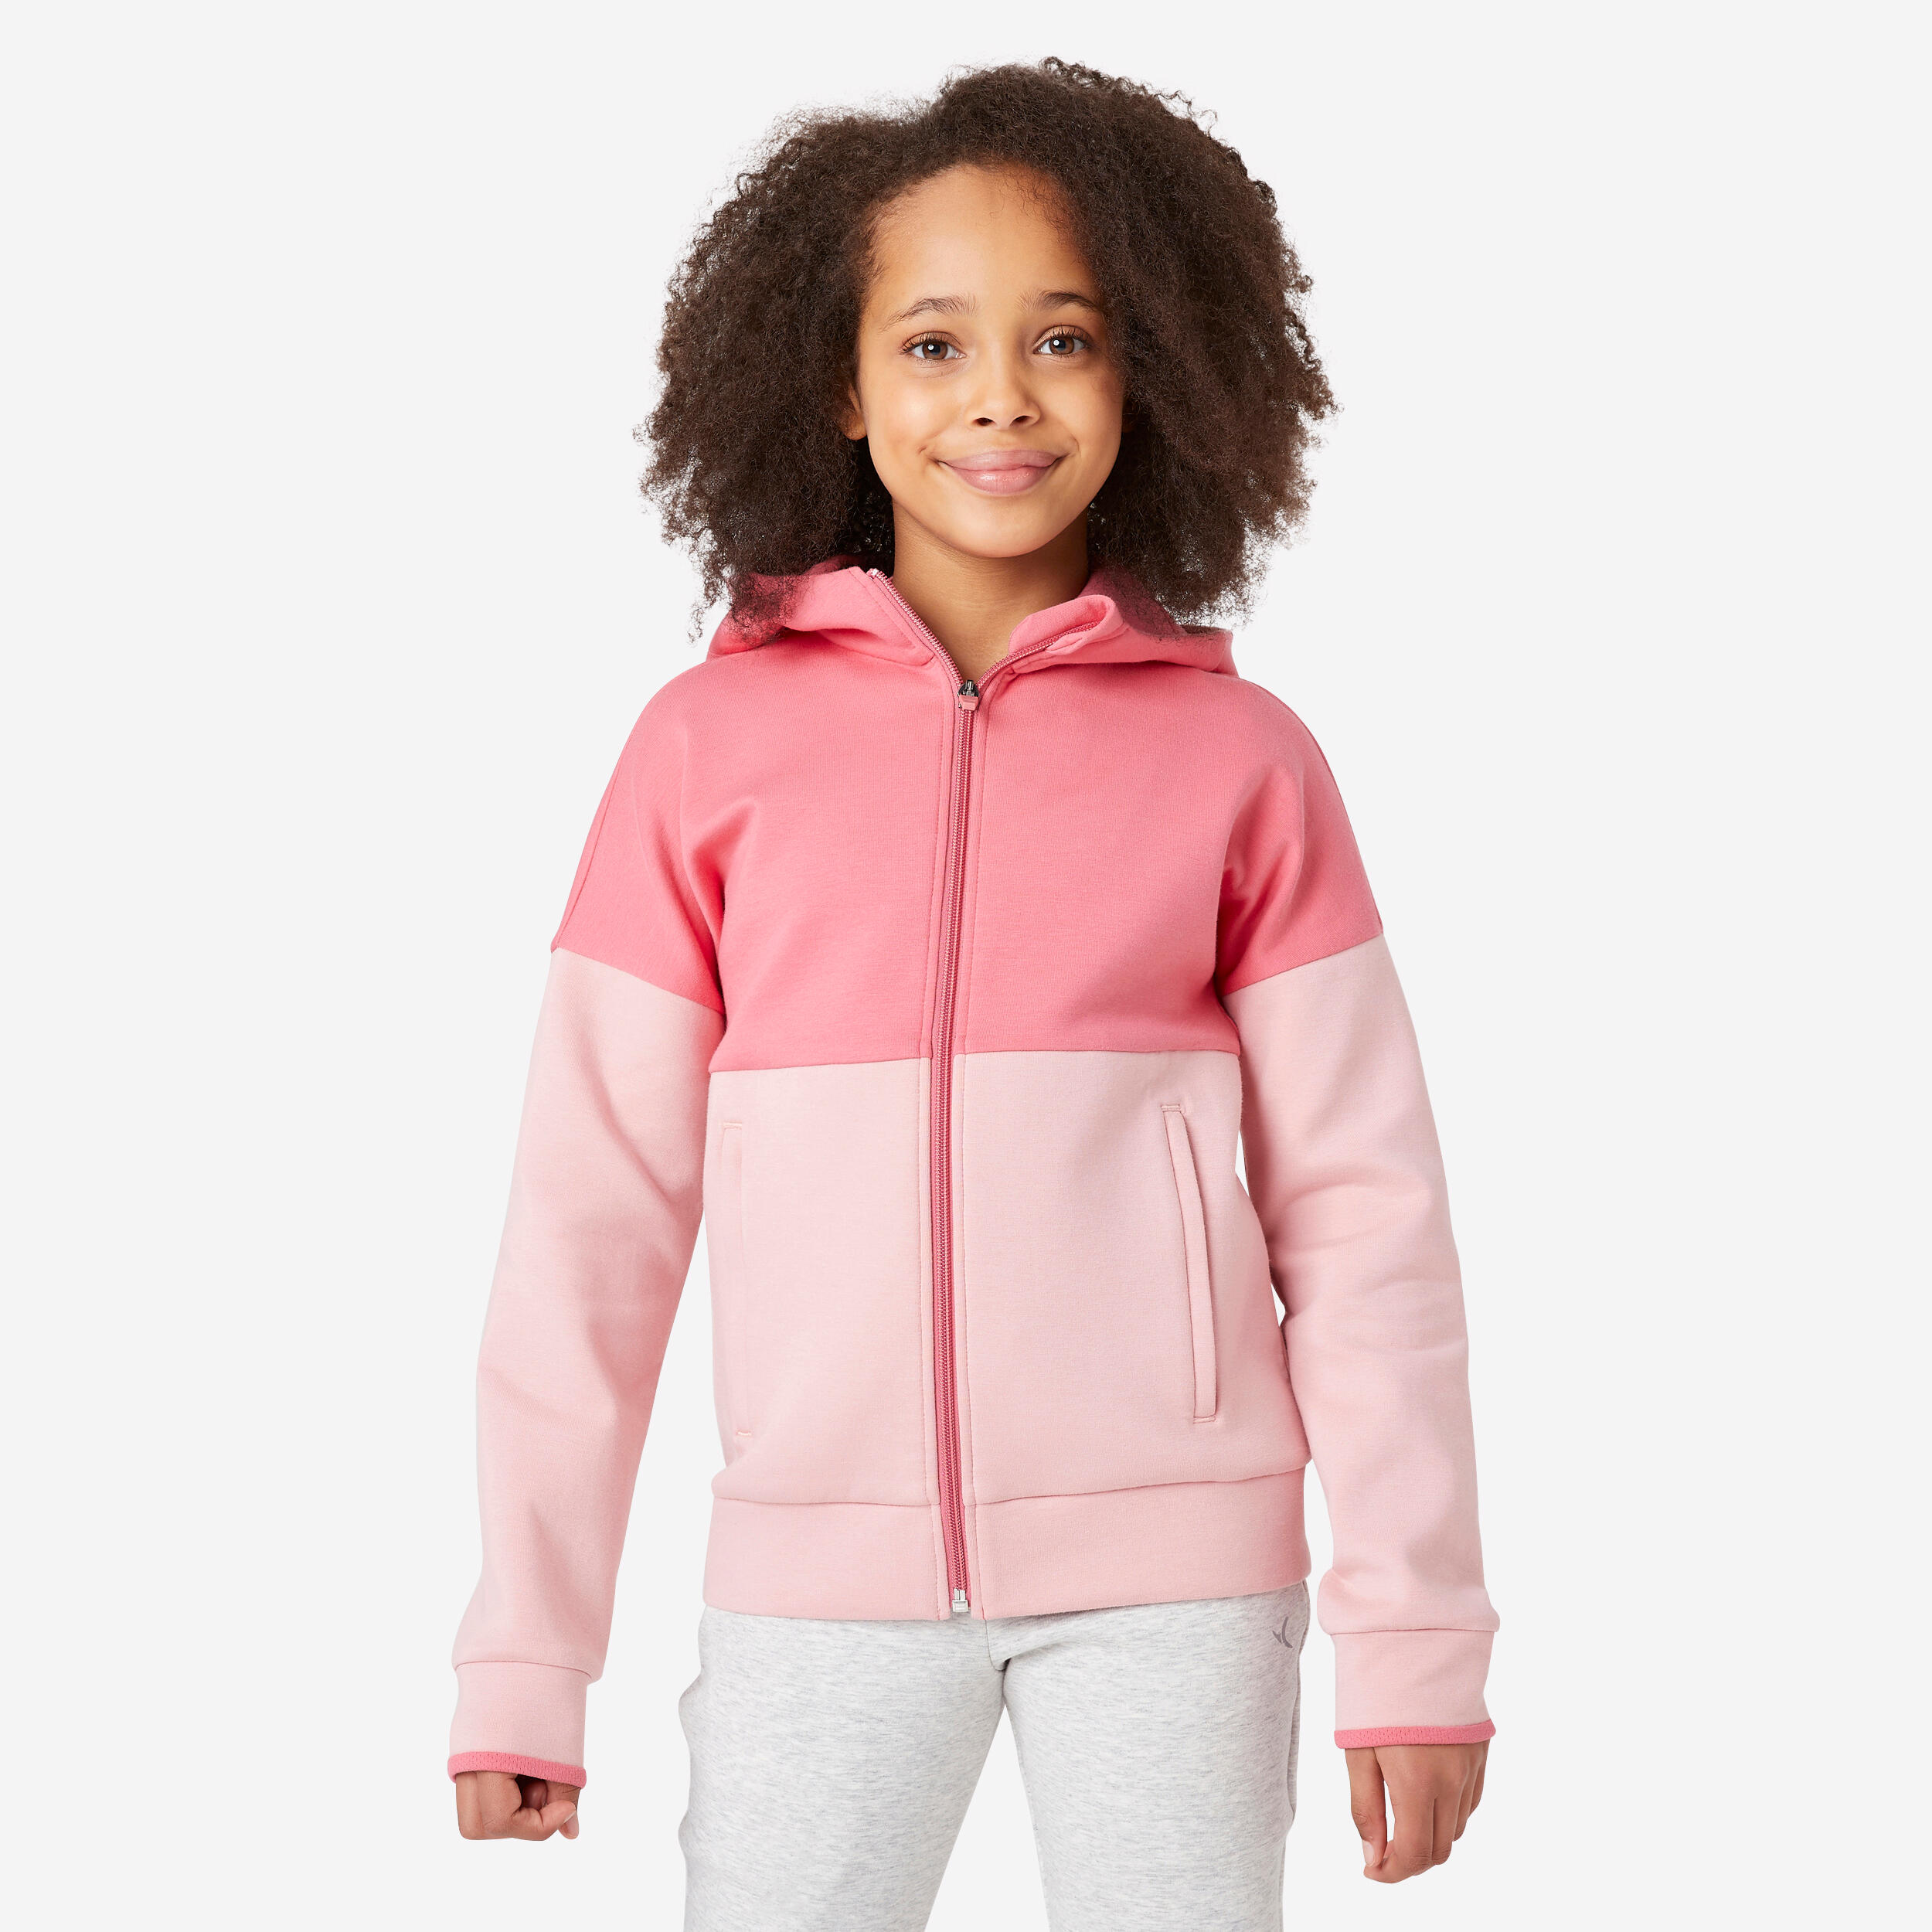 Zipper Jacket Warm Coat Fleece Fabric Wind Proof Hoodie for Children Boys  Girls Fashion Sweatshirt - China Hoodies and Hoodie price |  Made-in-China.com